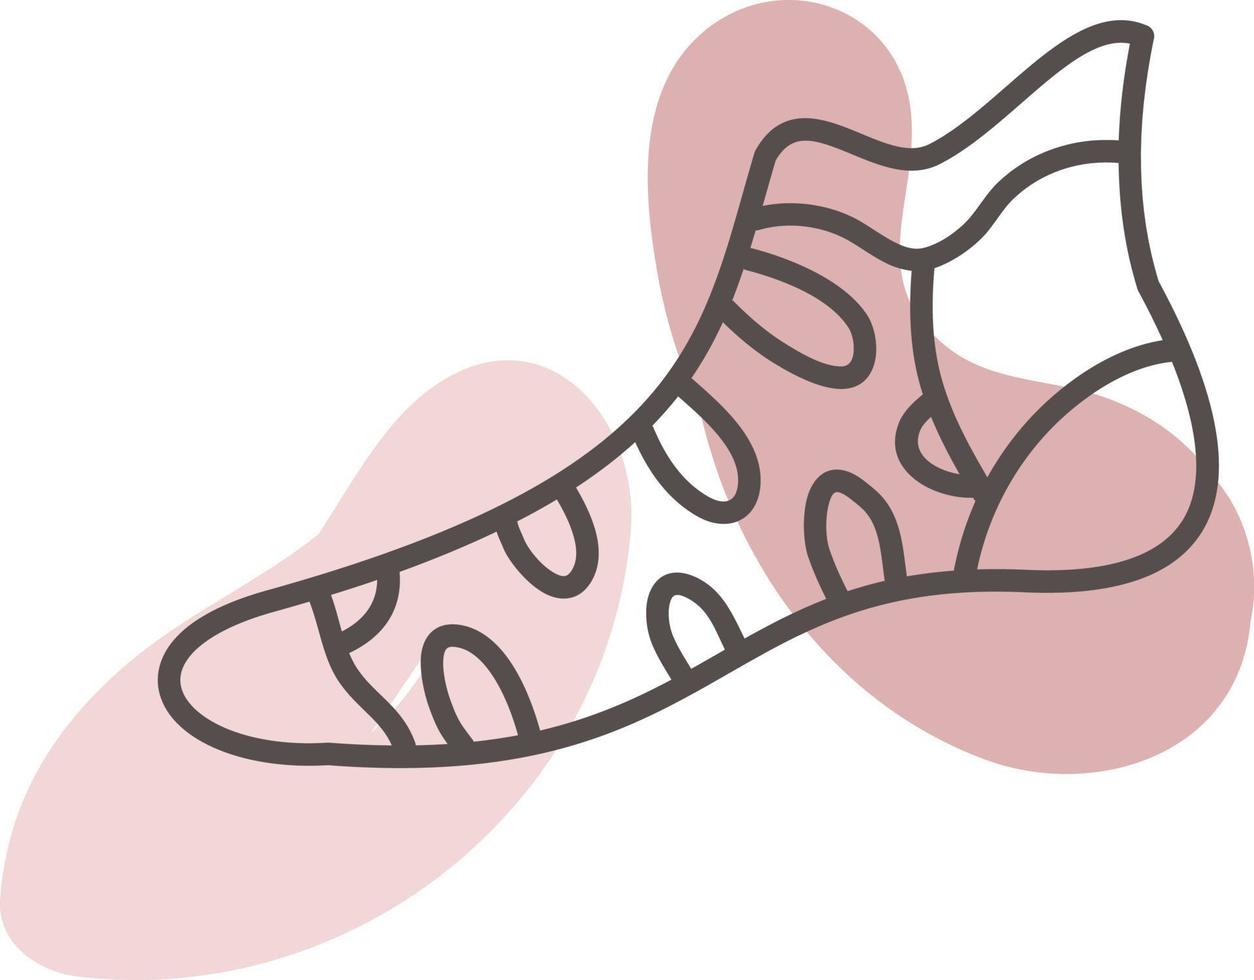 Girly sock, illustration, vector on a white background.